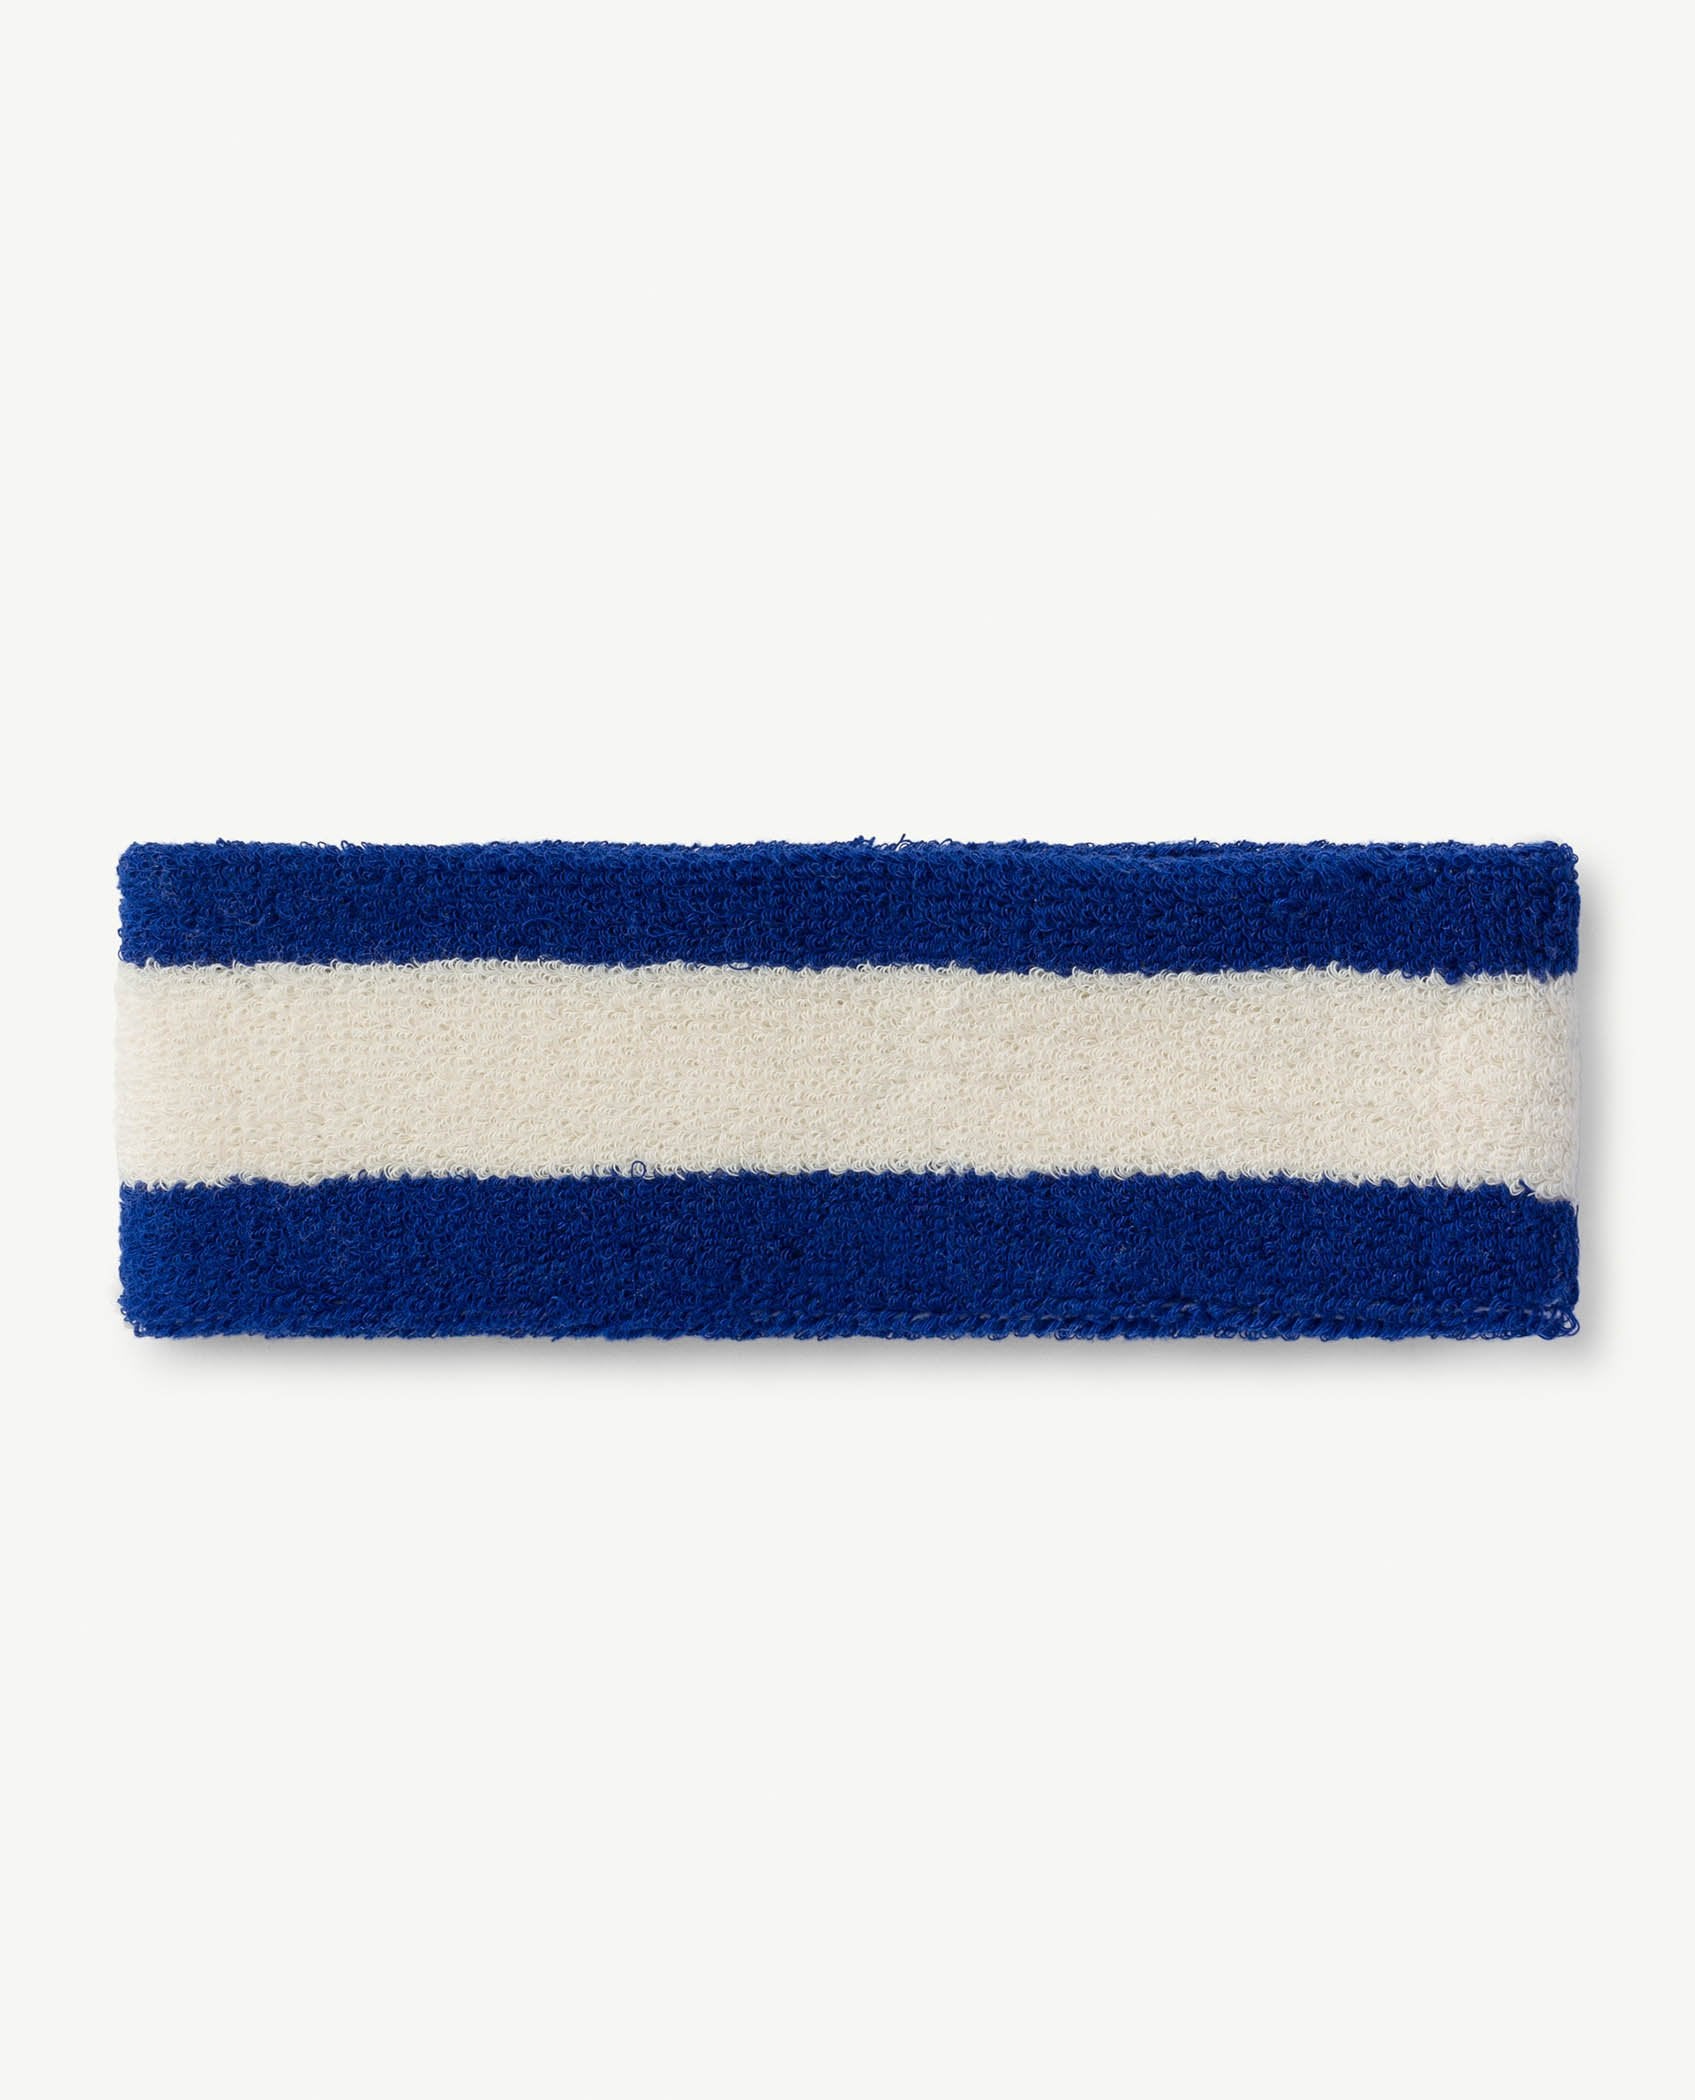 Blue Embroidery Headband PRODUCT BACK